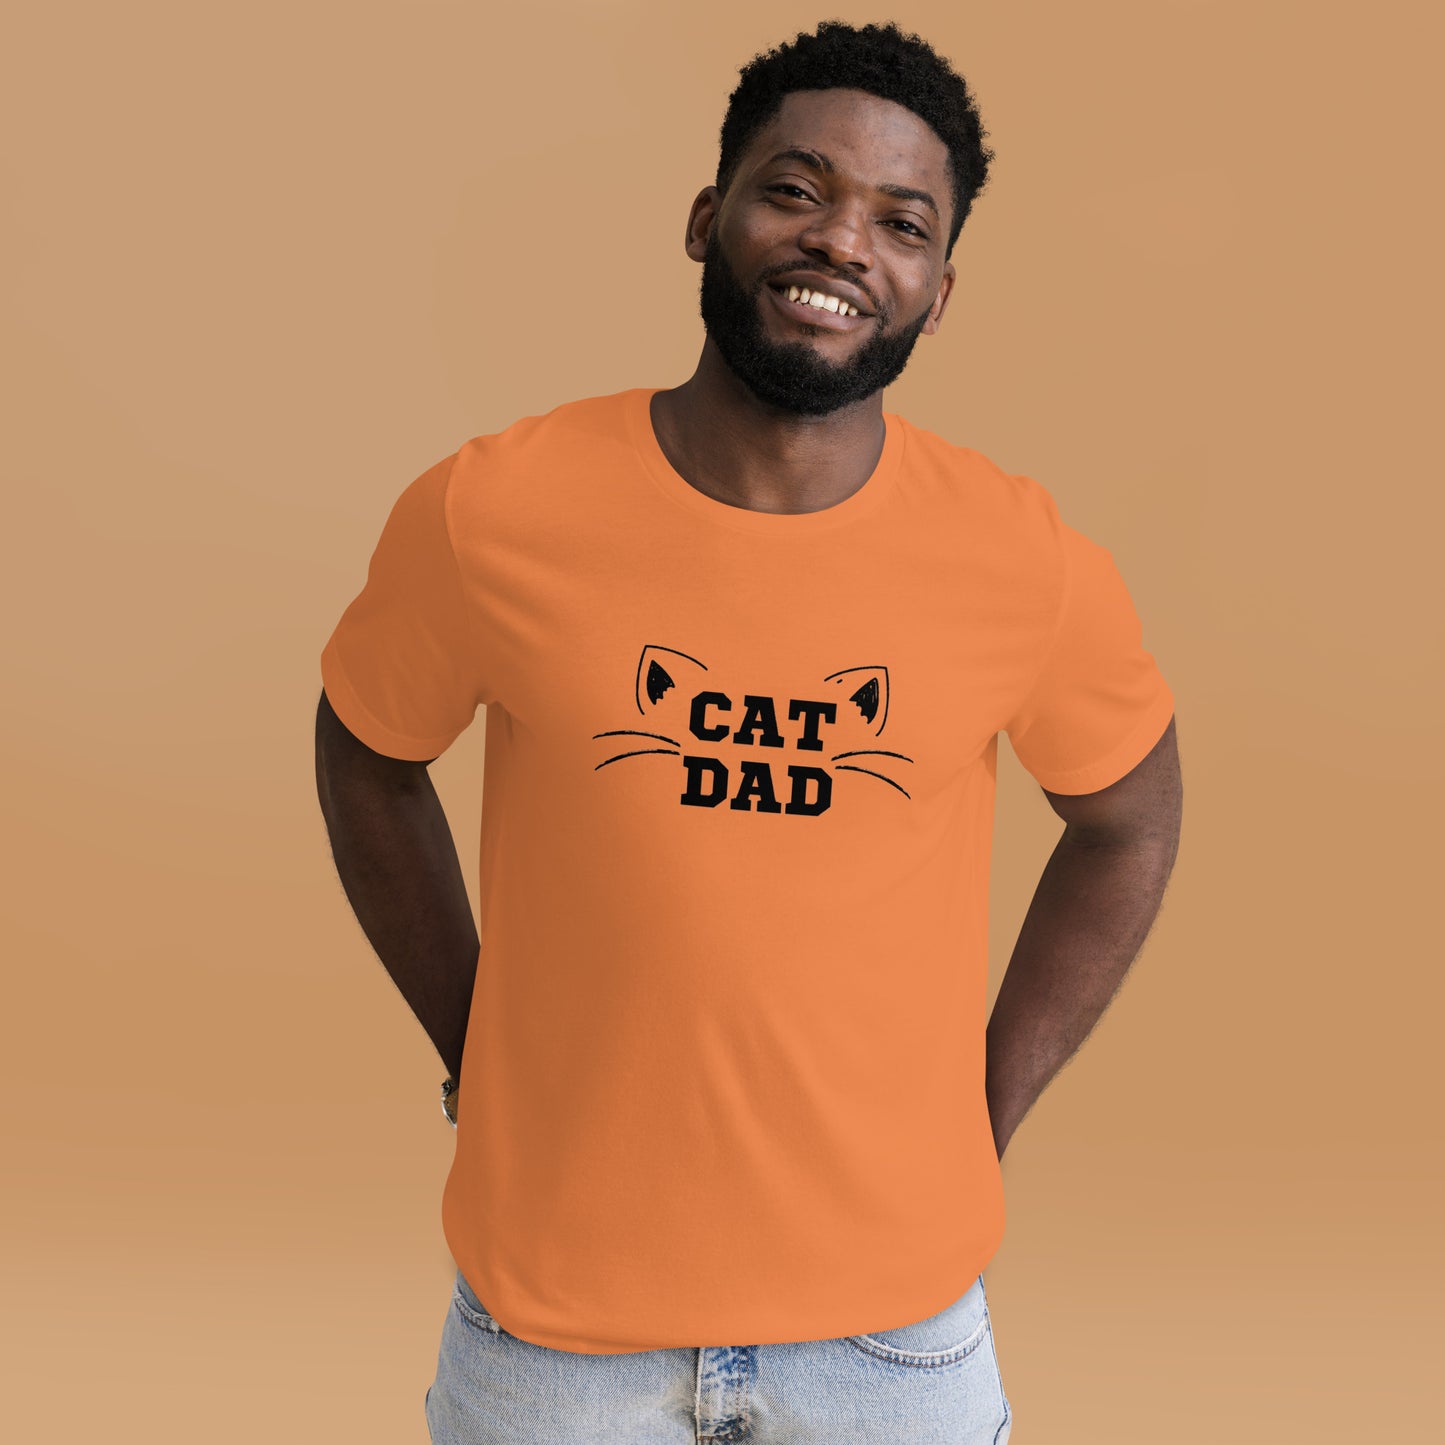 Cat Dad Tee - black print